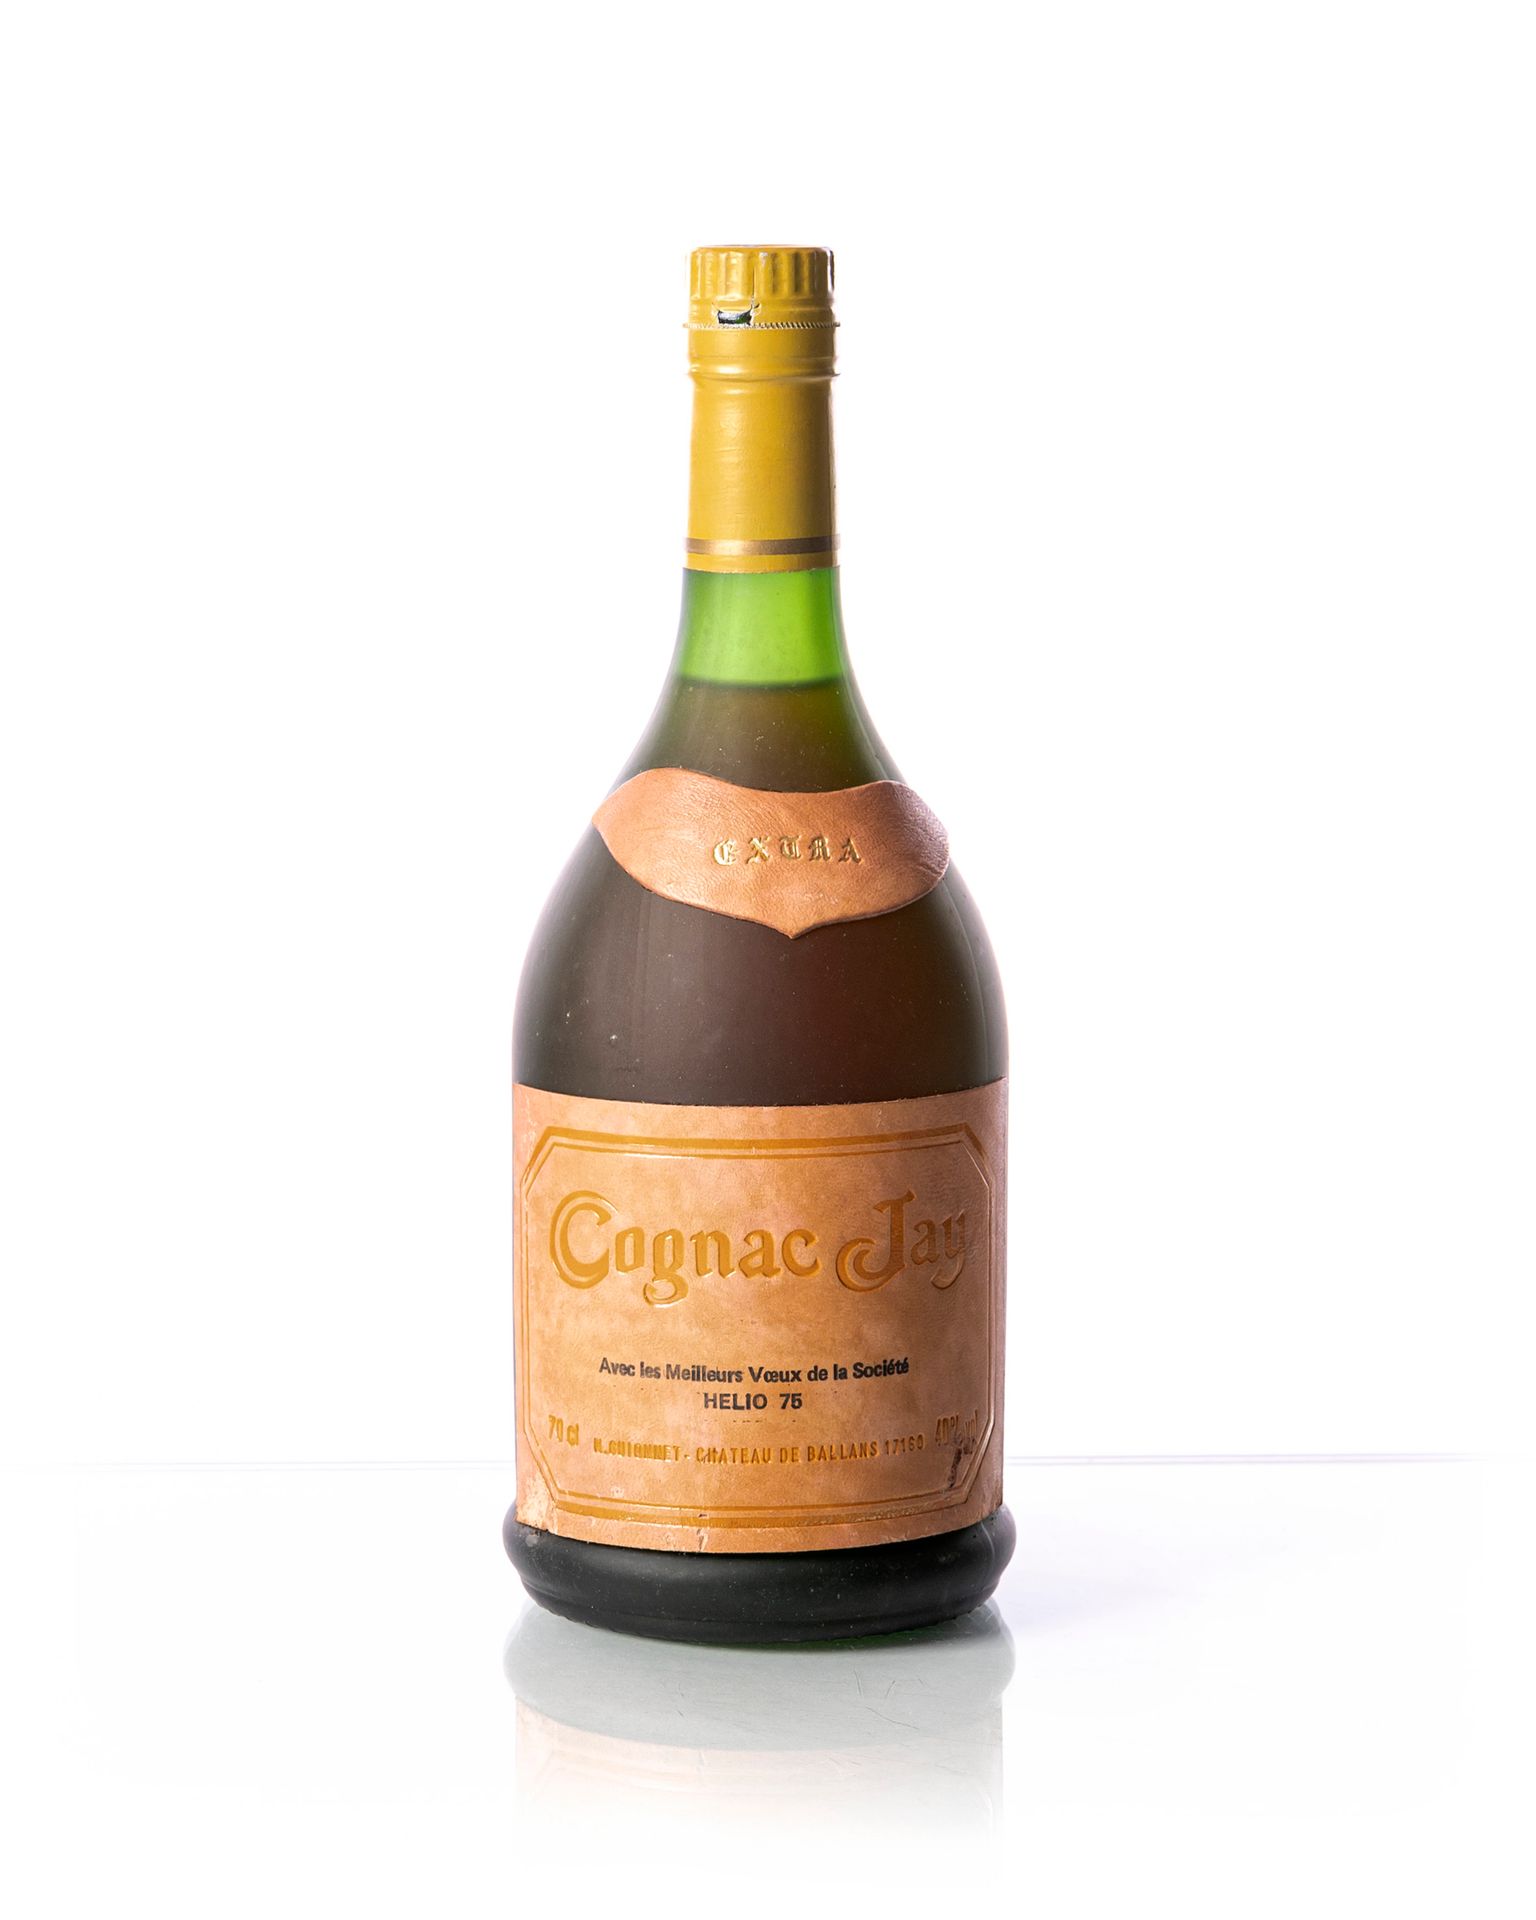 Null 1 botella (70 cl. - 40°) COGNAC JAY EXTRA - CHÂTEAU DE BALLANS
Año : NM
Den&hellip;